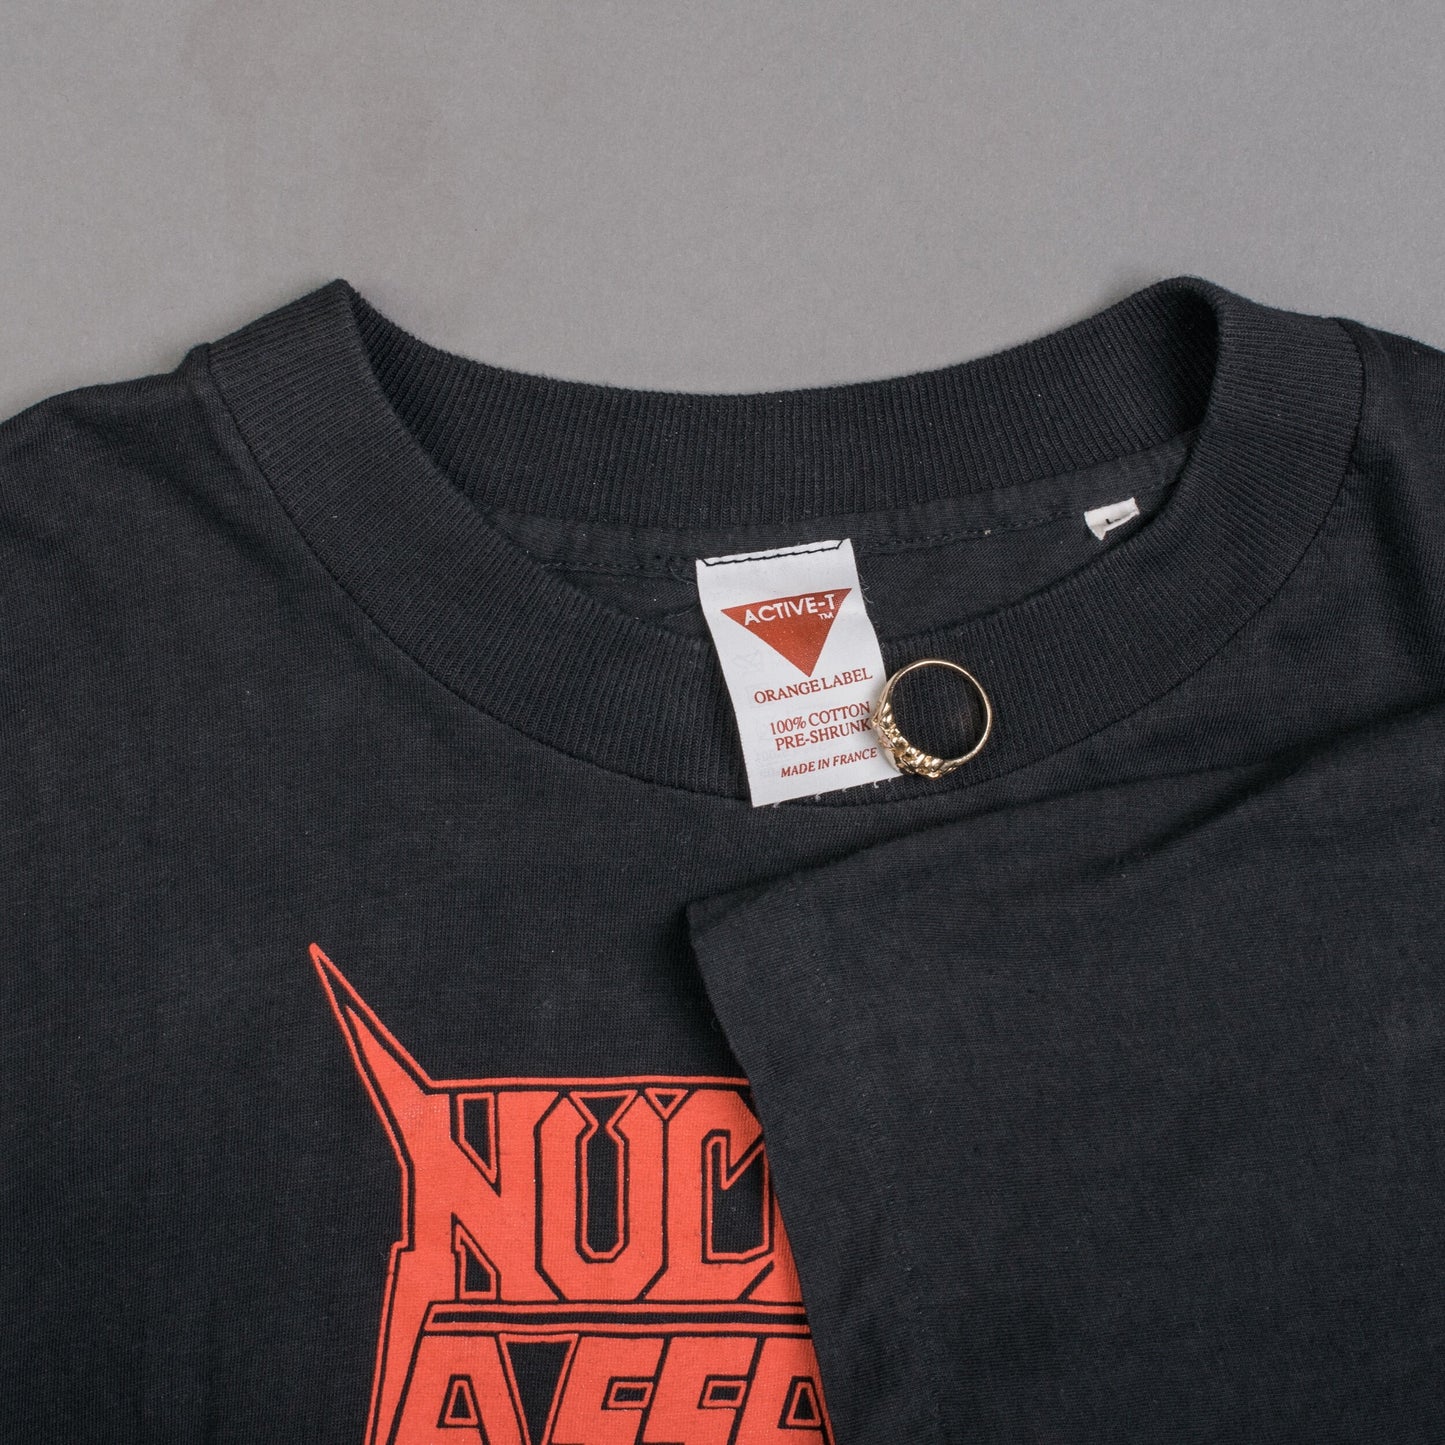 Vintage 1990 Nuclear Assault Handle With Care Tour T-Shirt